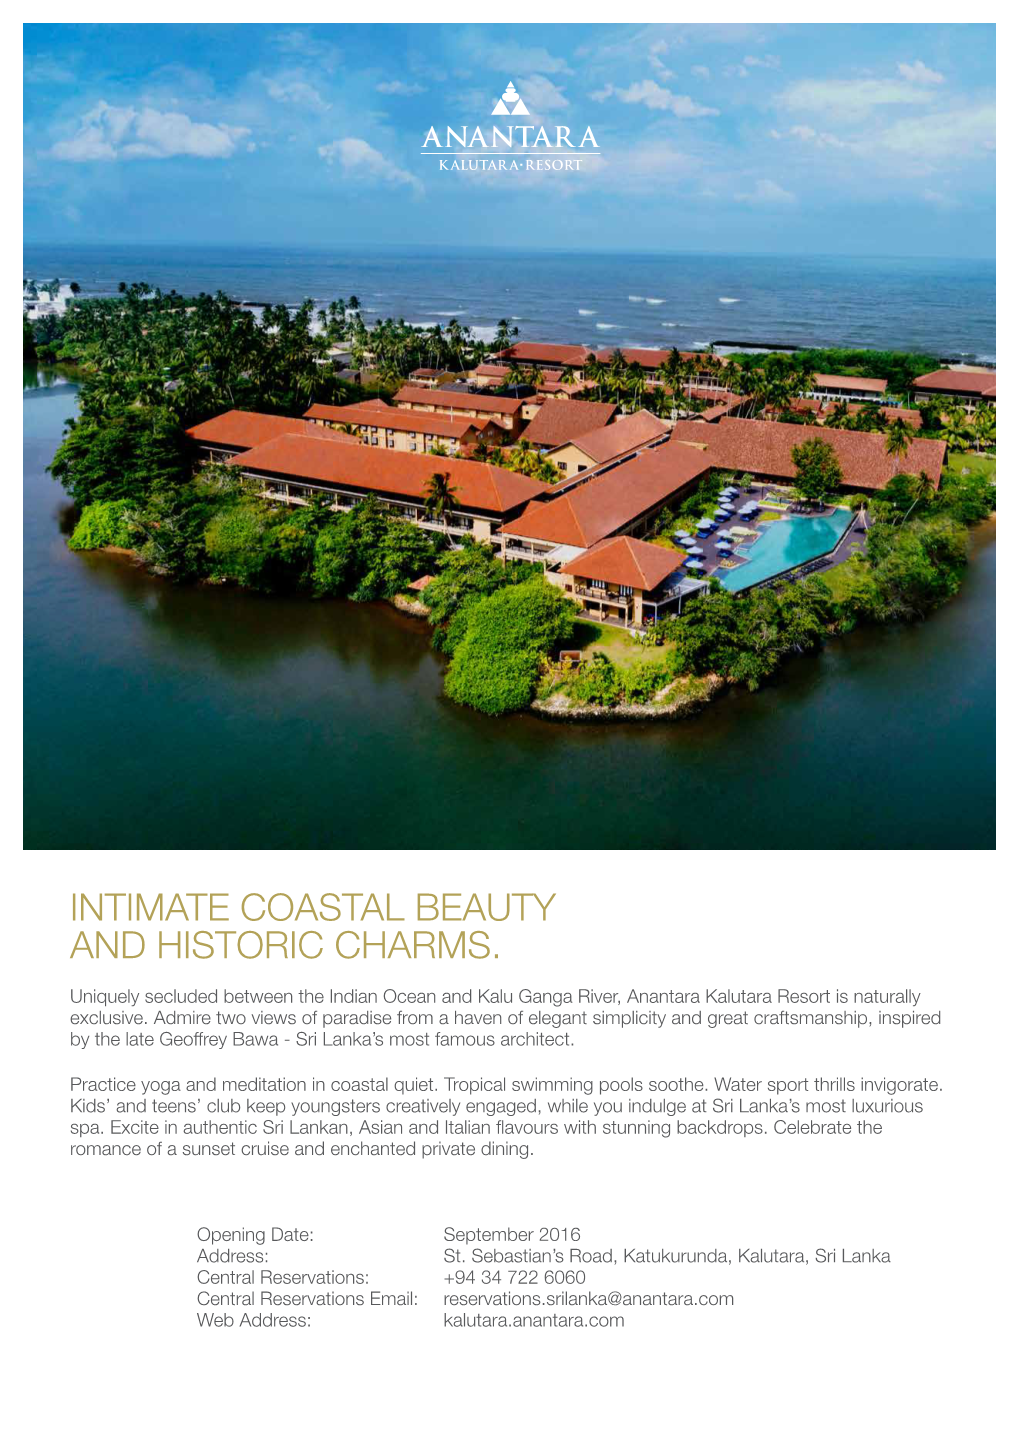 Anantara Kalutara Resort Is Naturally Exclusive